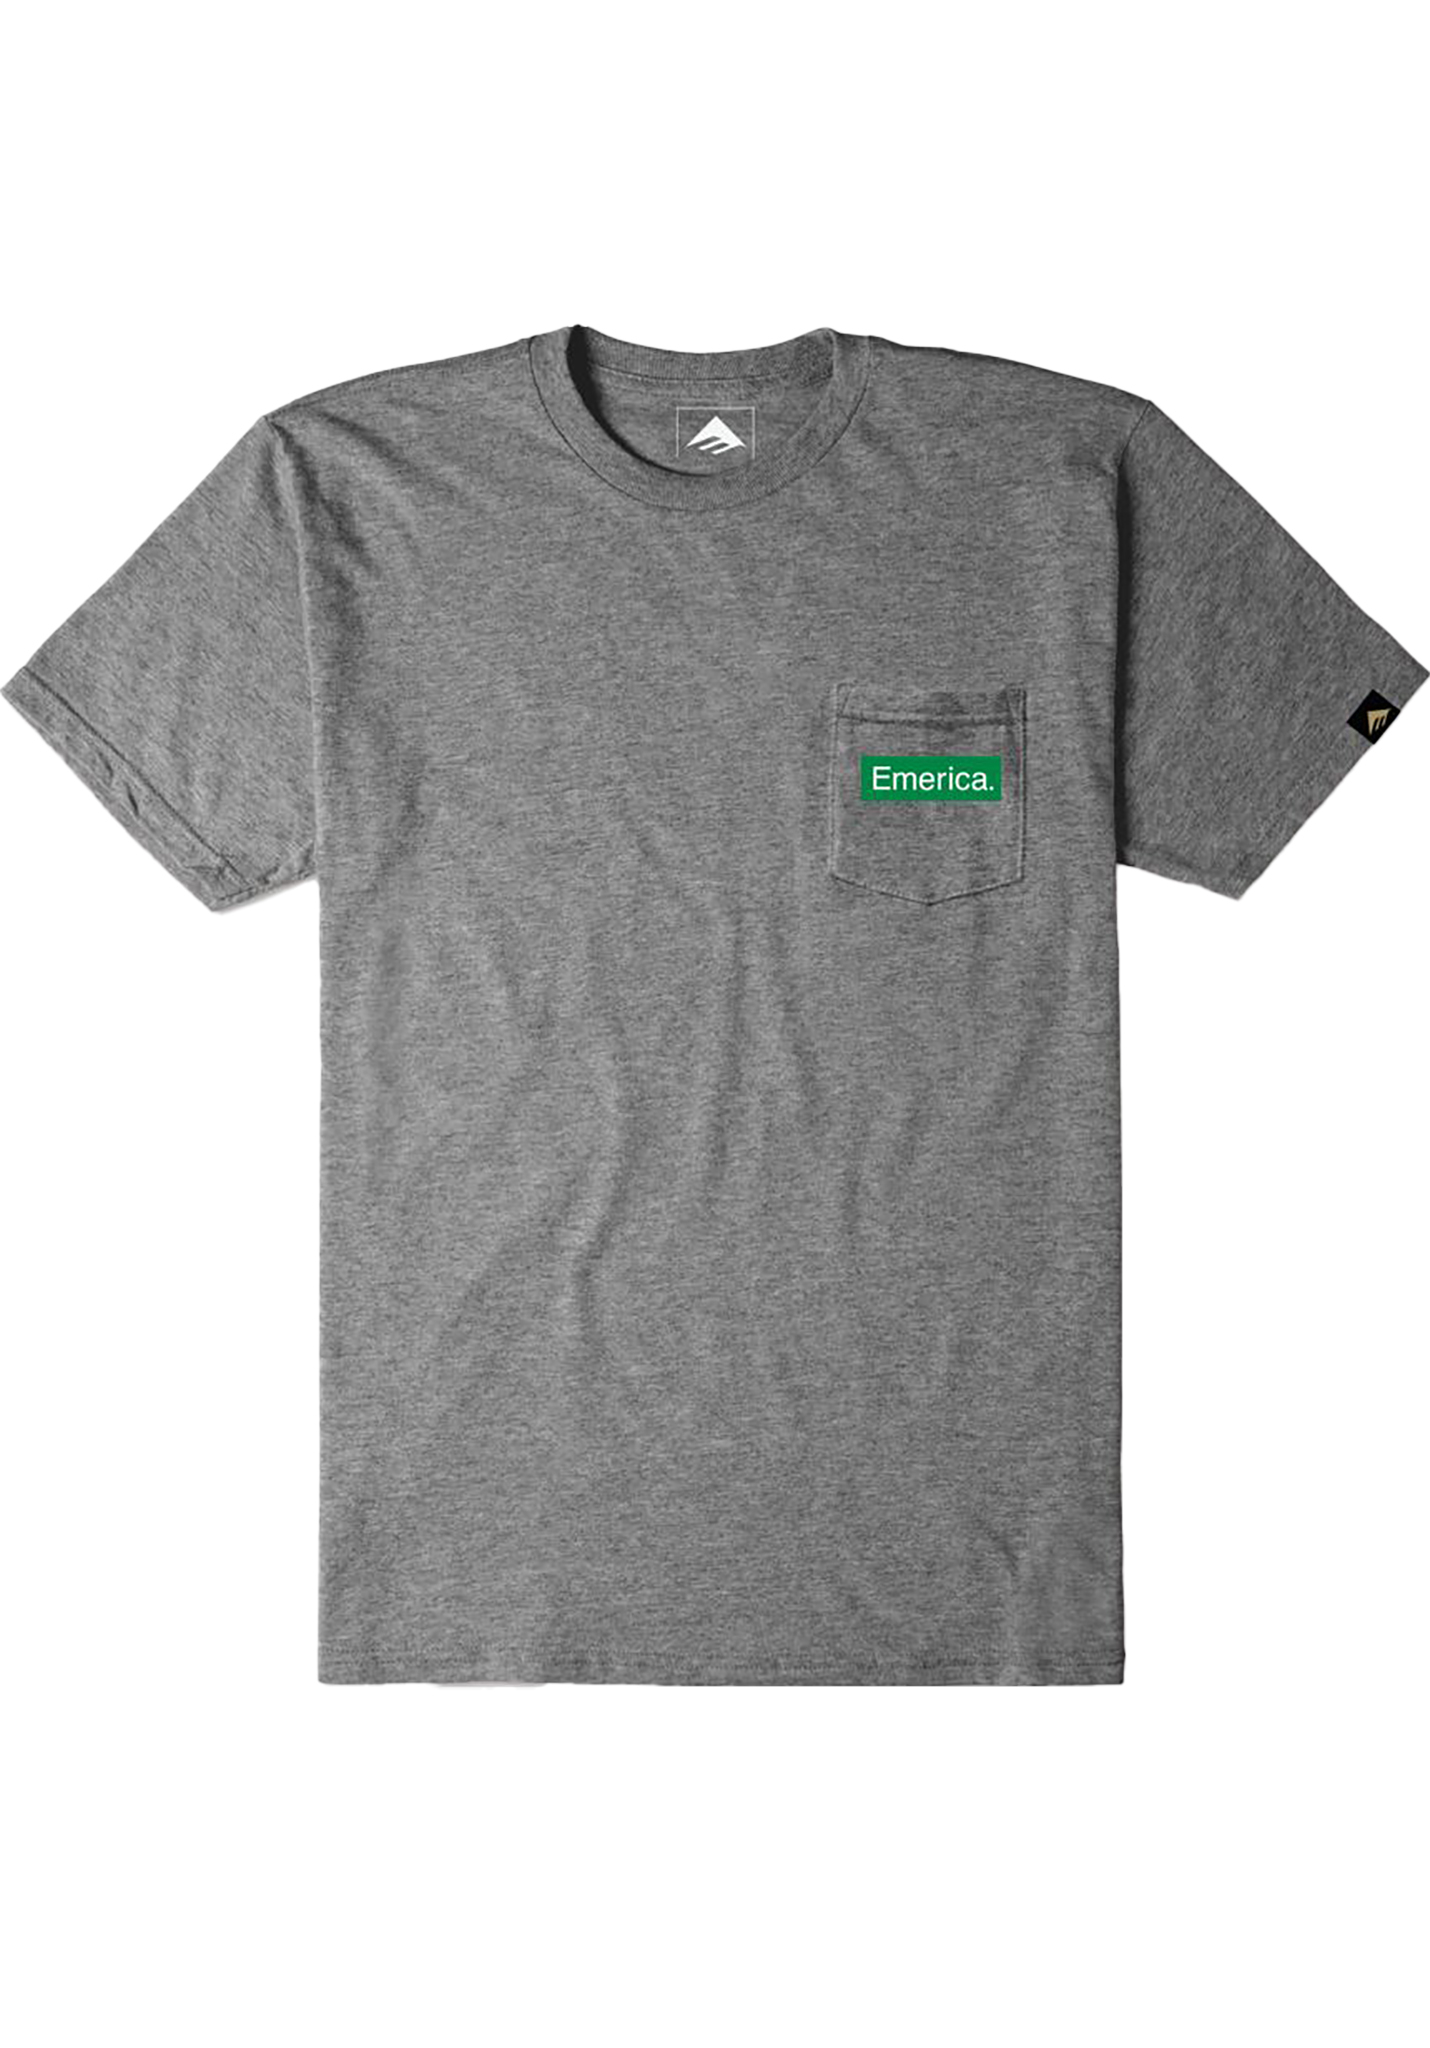 Emerica Pure Triangle Pocket T-Shirt holzkohle/leder S